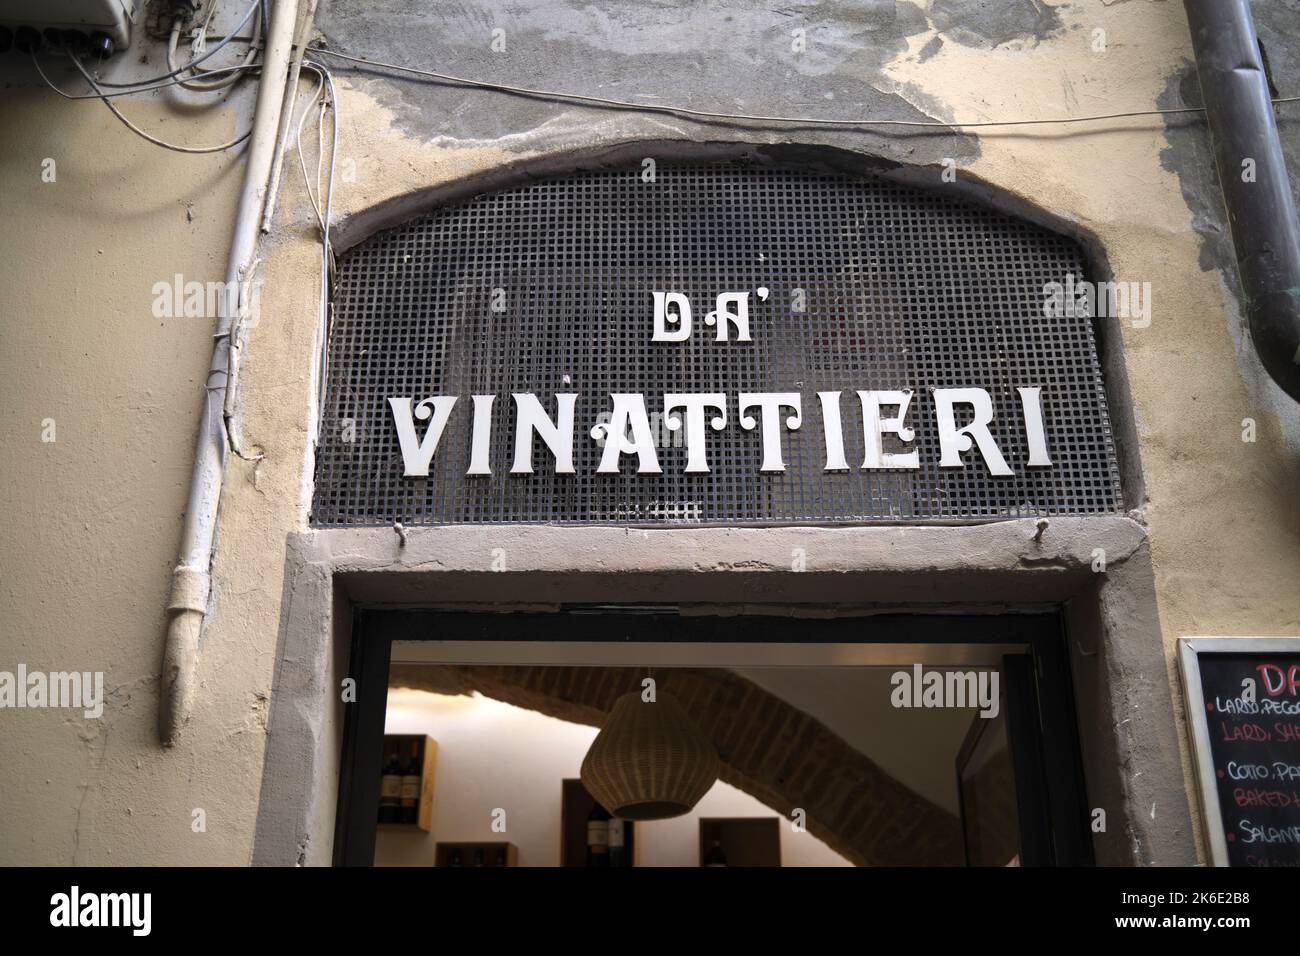 Da Vinattieri tripe Stall Florence Italie Banque D'Images